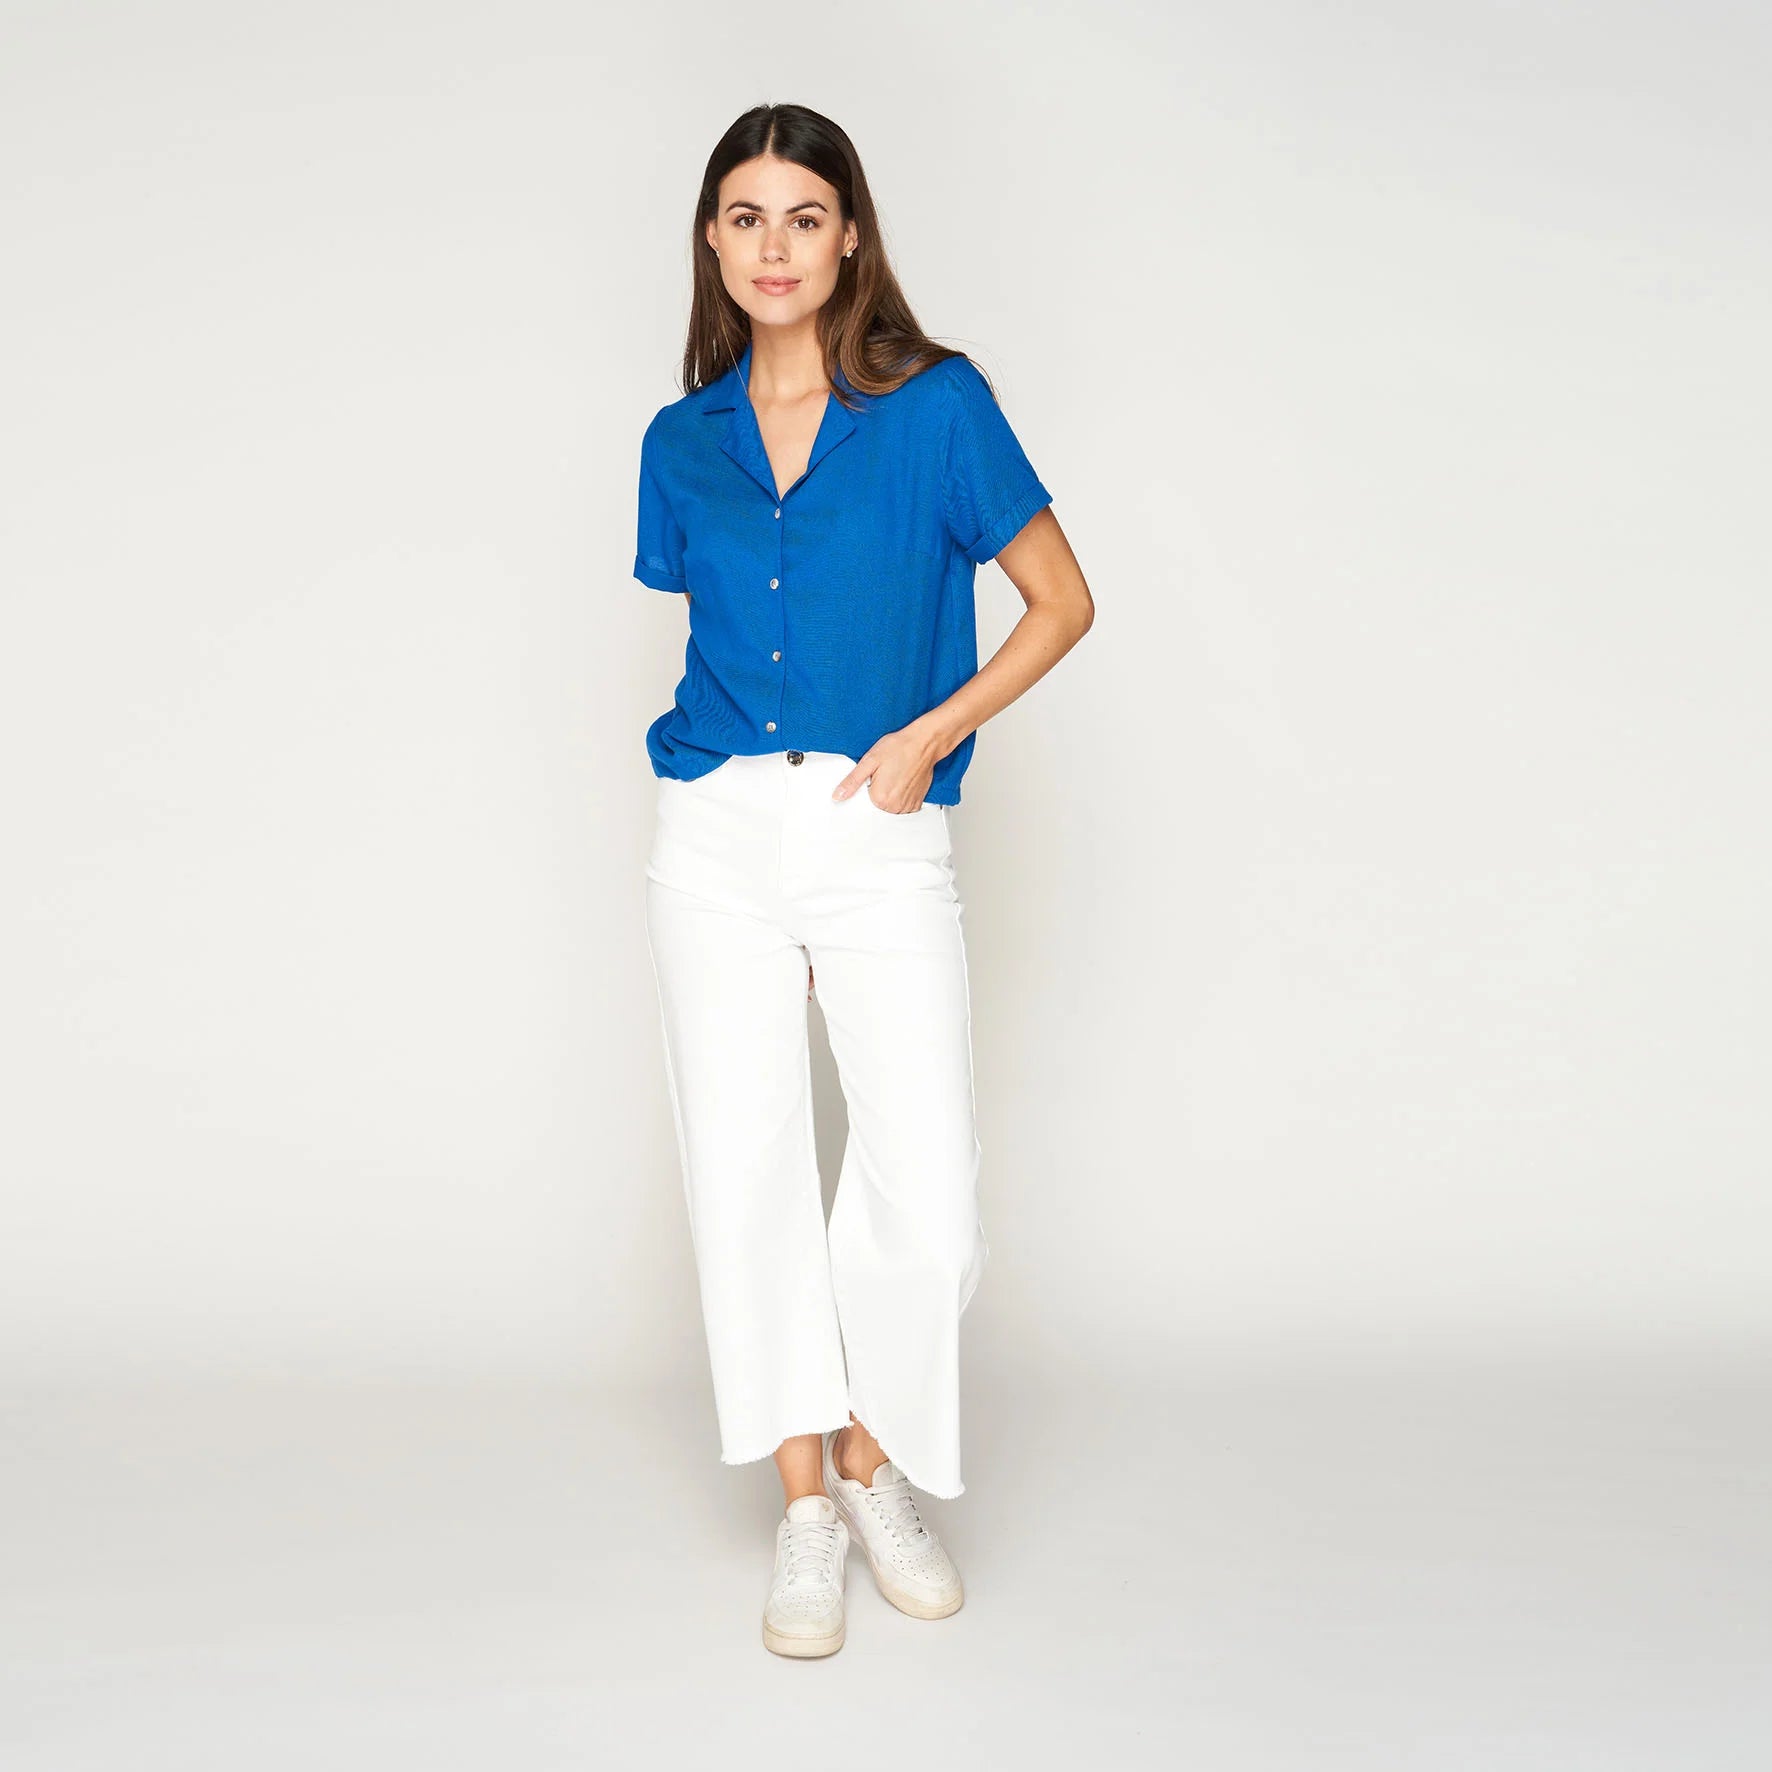 Witte broek met rafels en een blauwe blouse